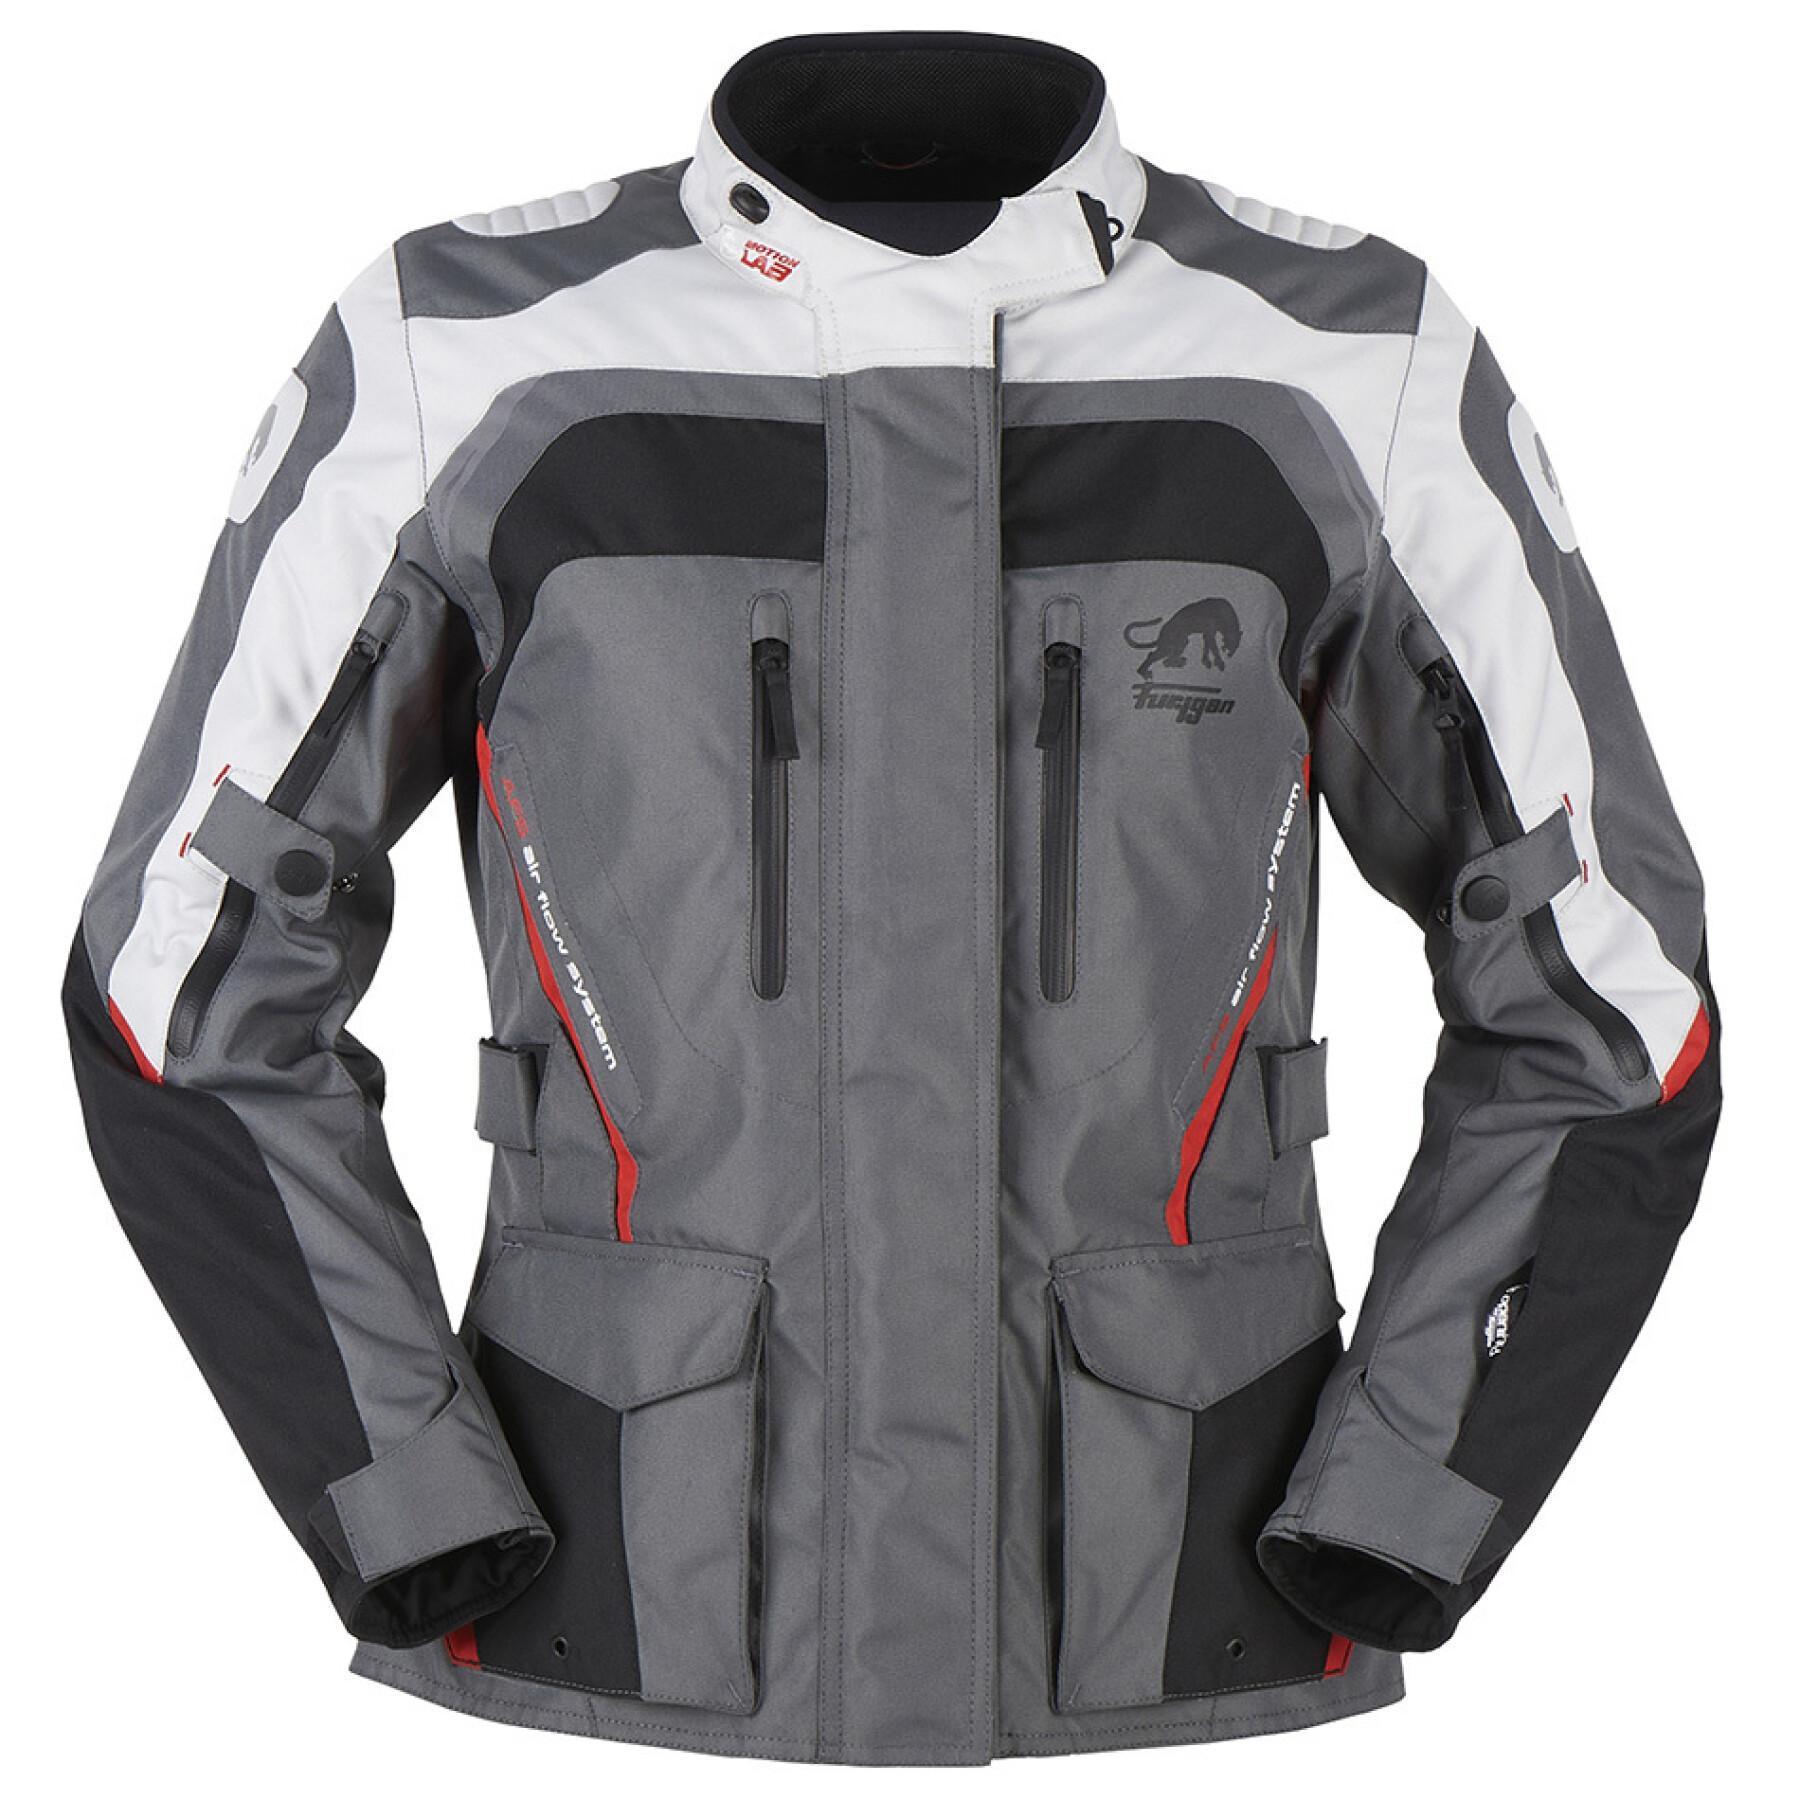 Used: Furygan Shield 3-in-1 textile jacket review | Visordown